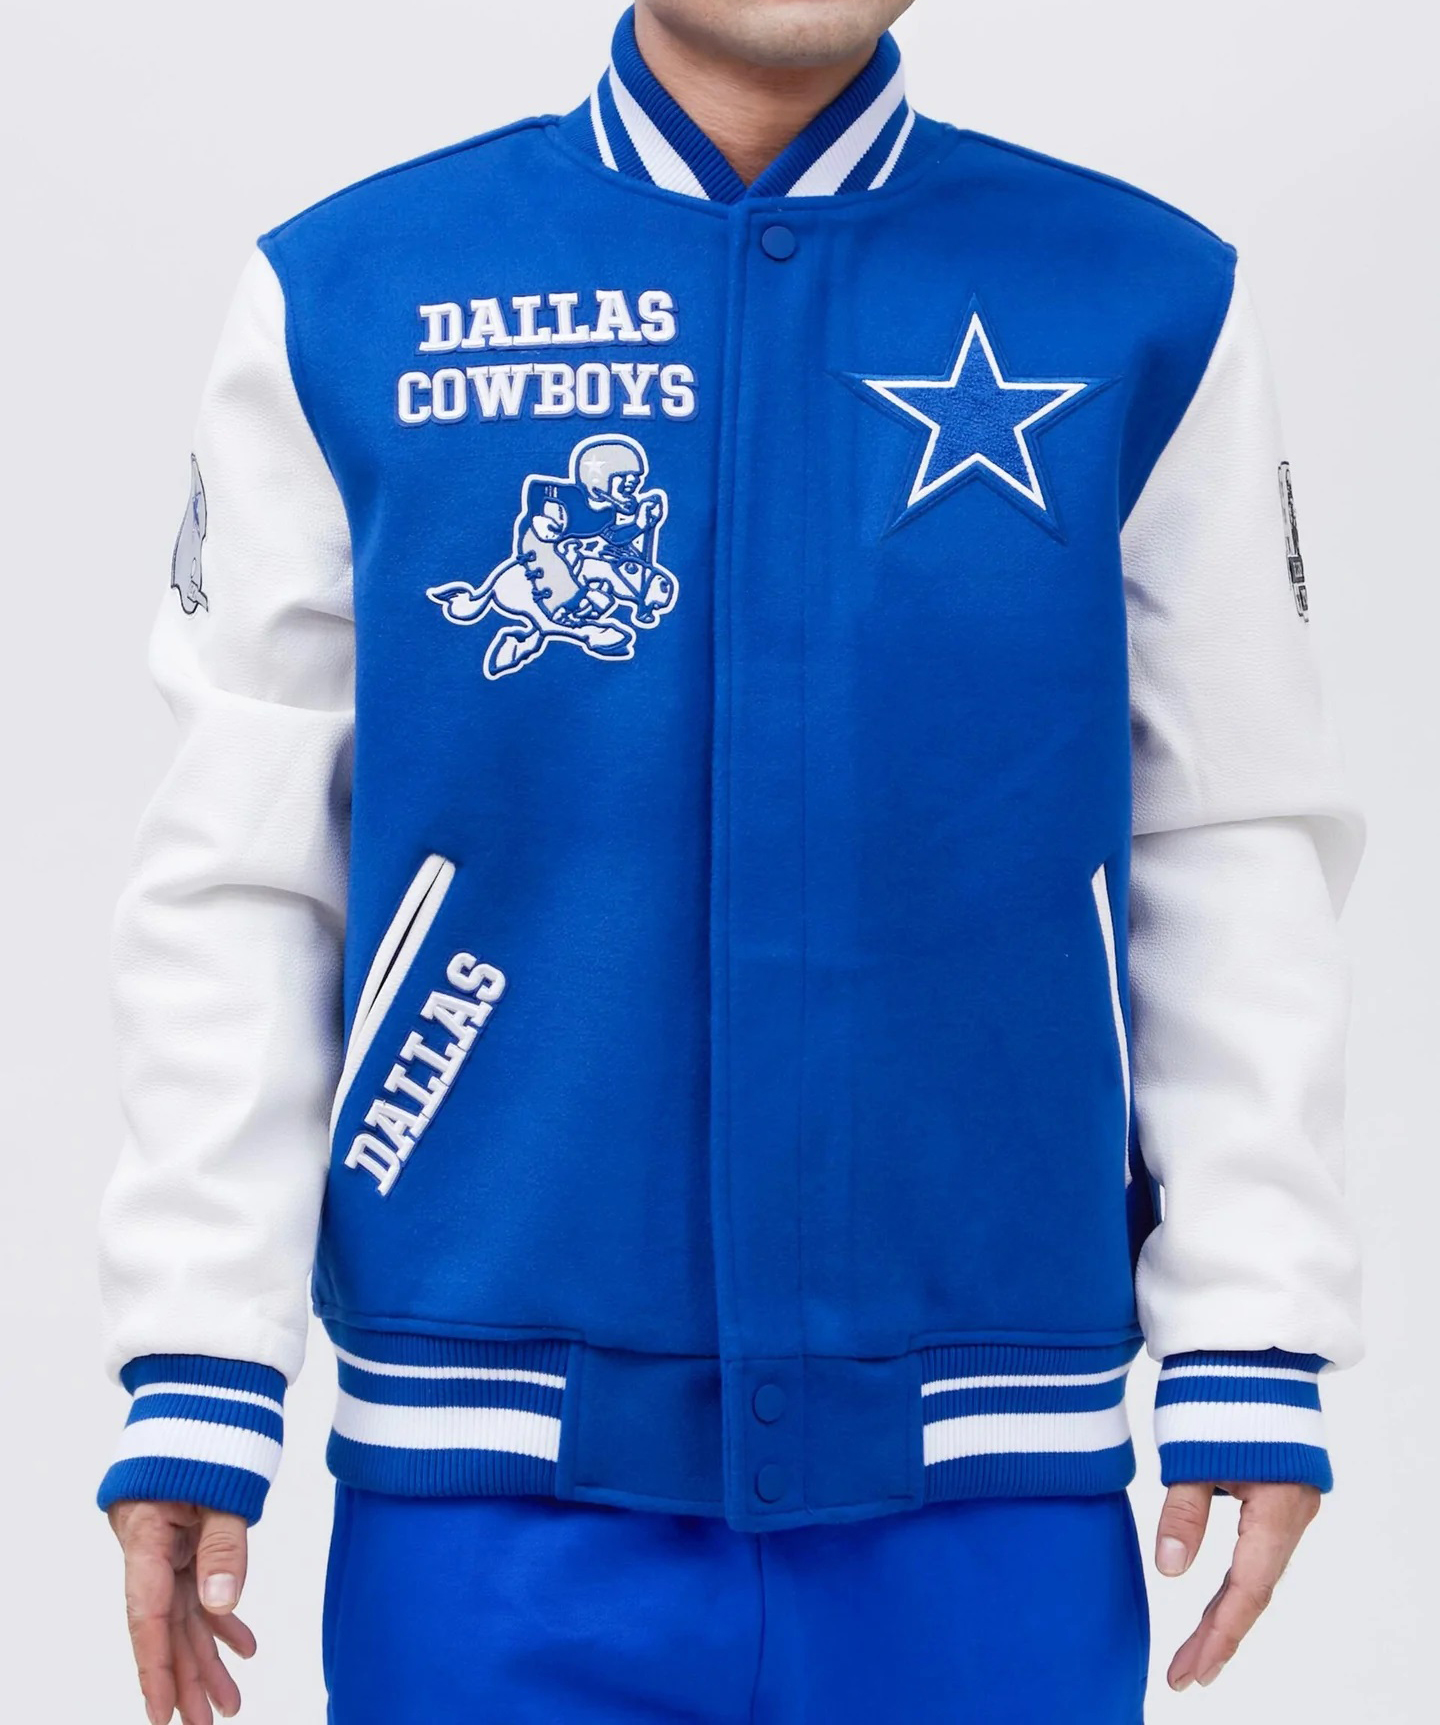 Dallas Cowboys Retro Classic Blue White Varsity Jacket - Maker of